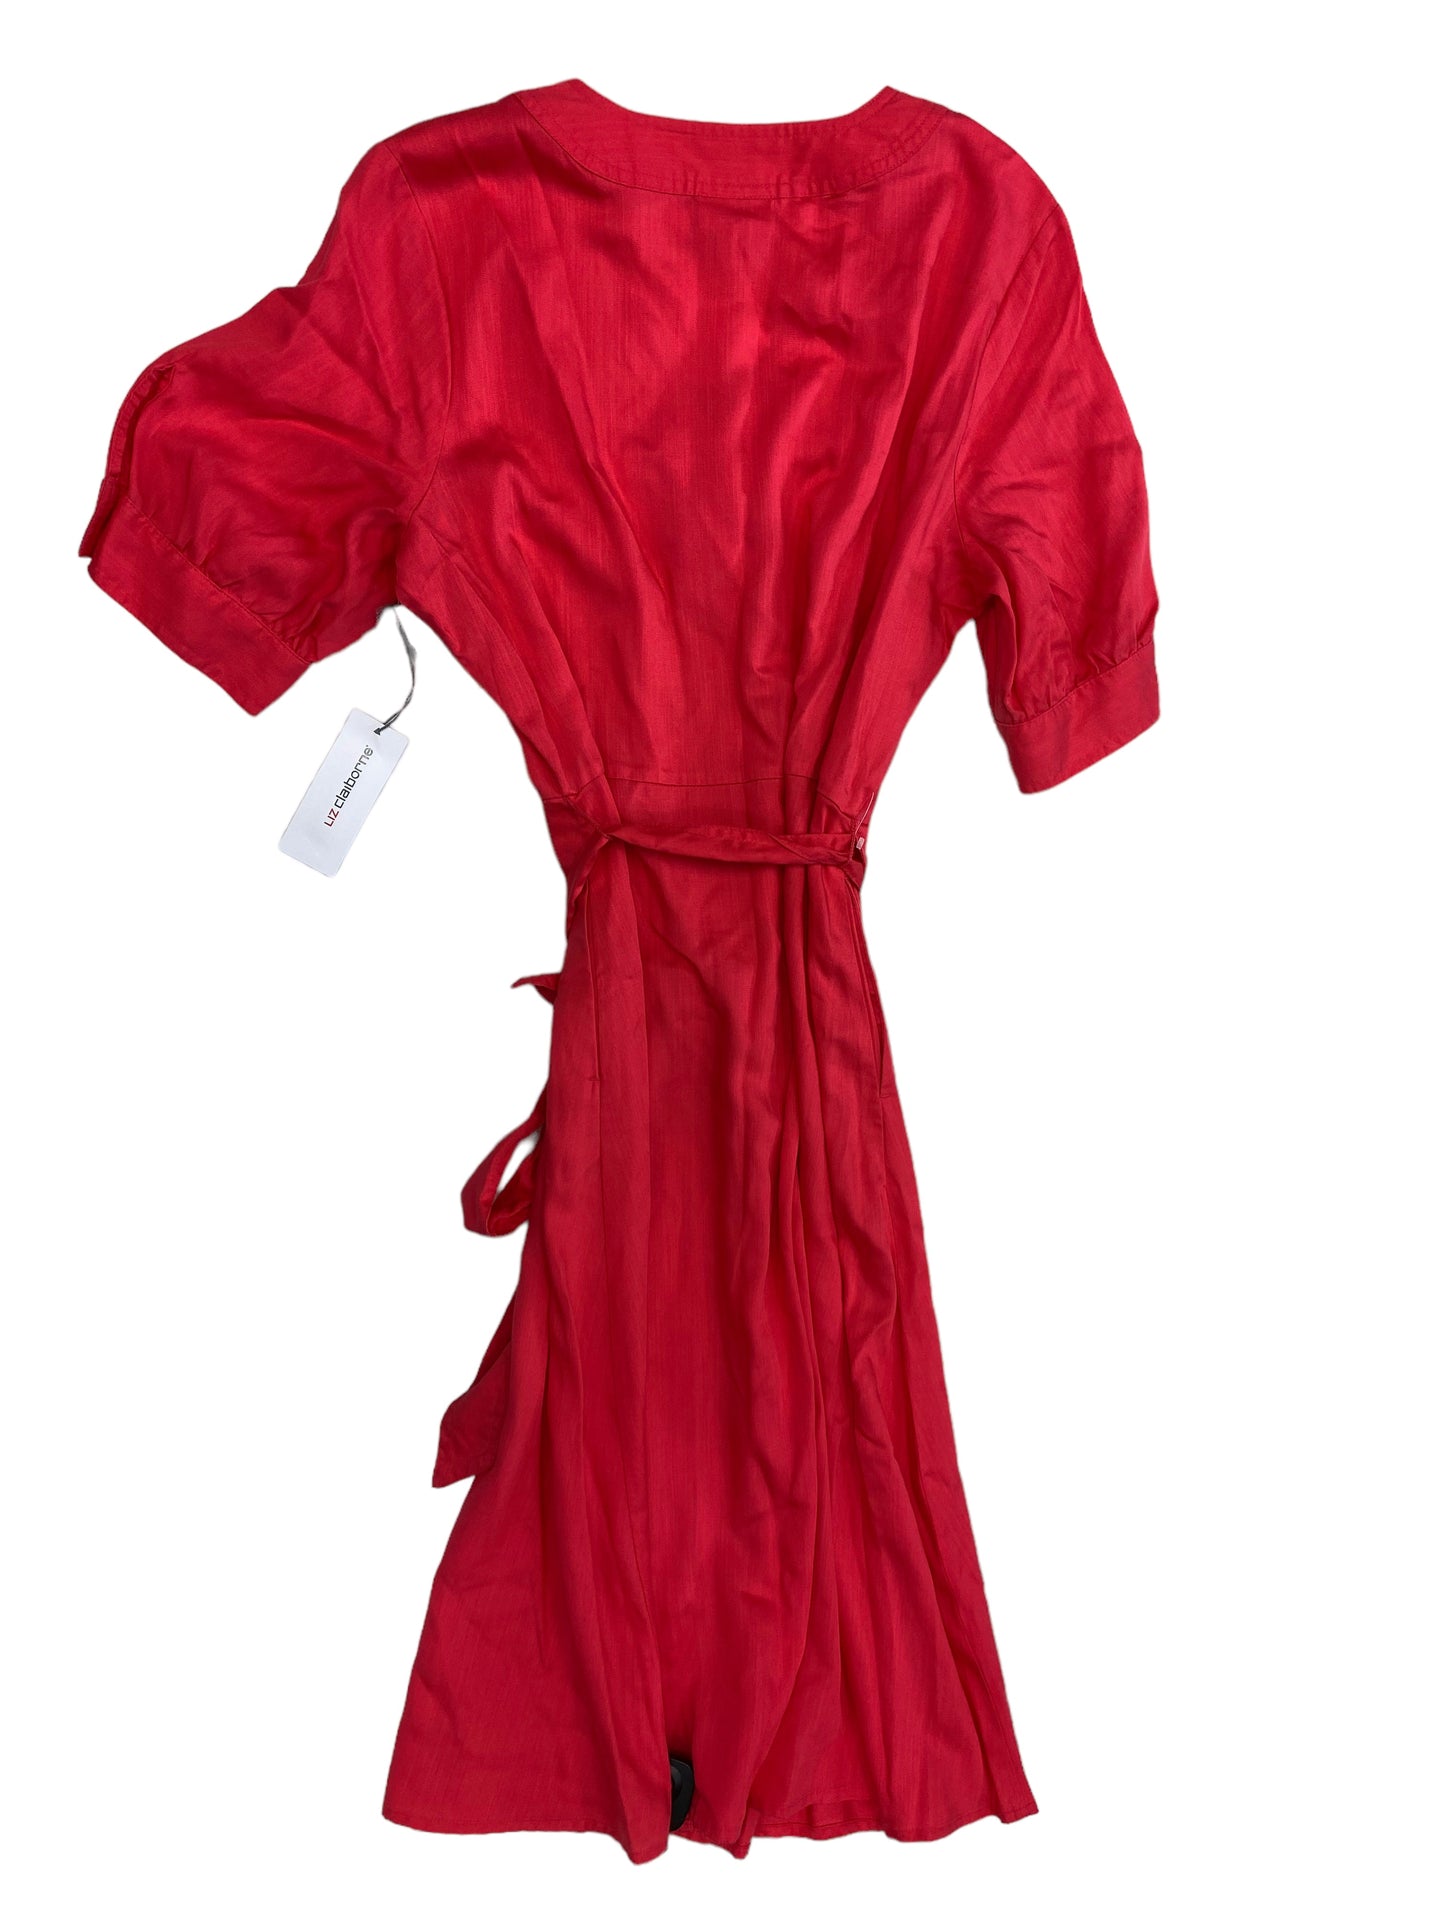 Pink Dress Casual Midi Liz Claiborne, Size 10petite